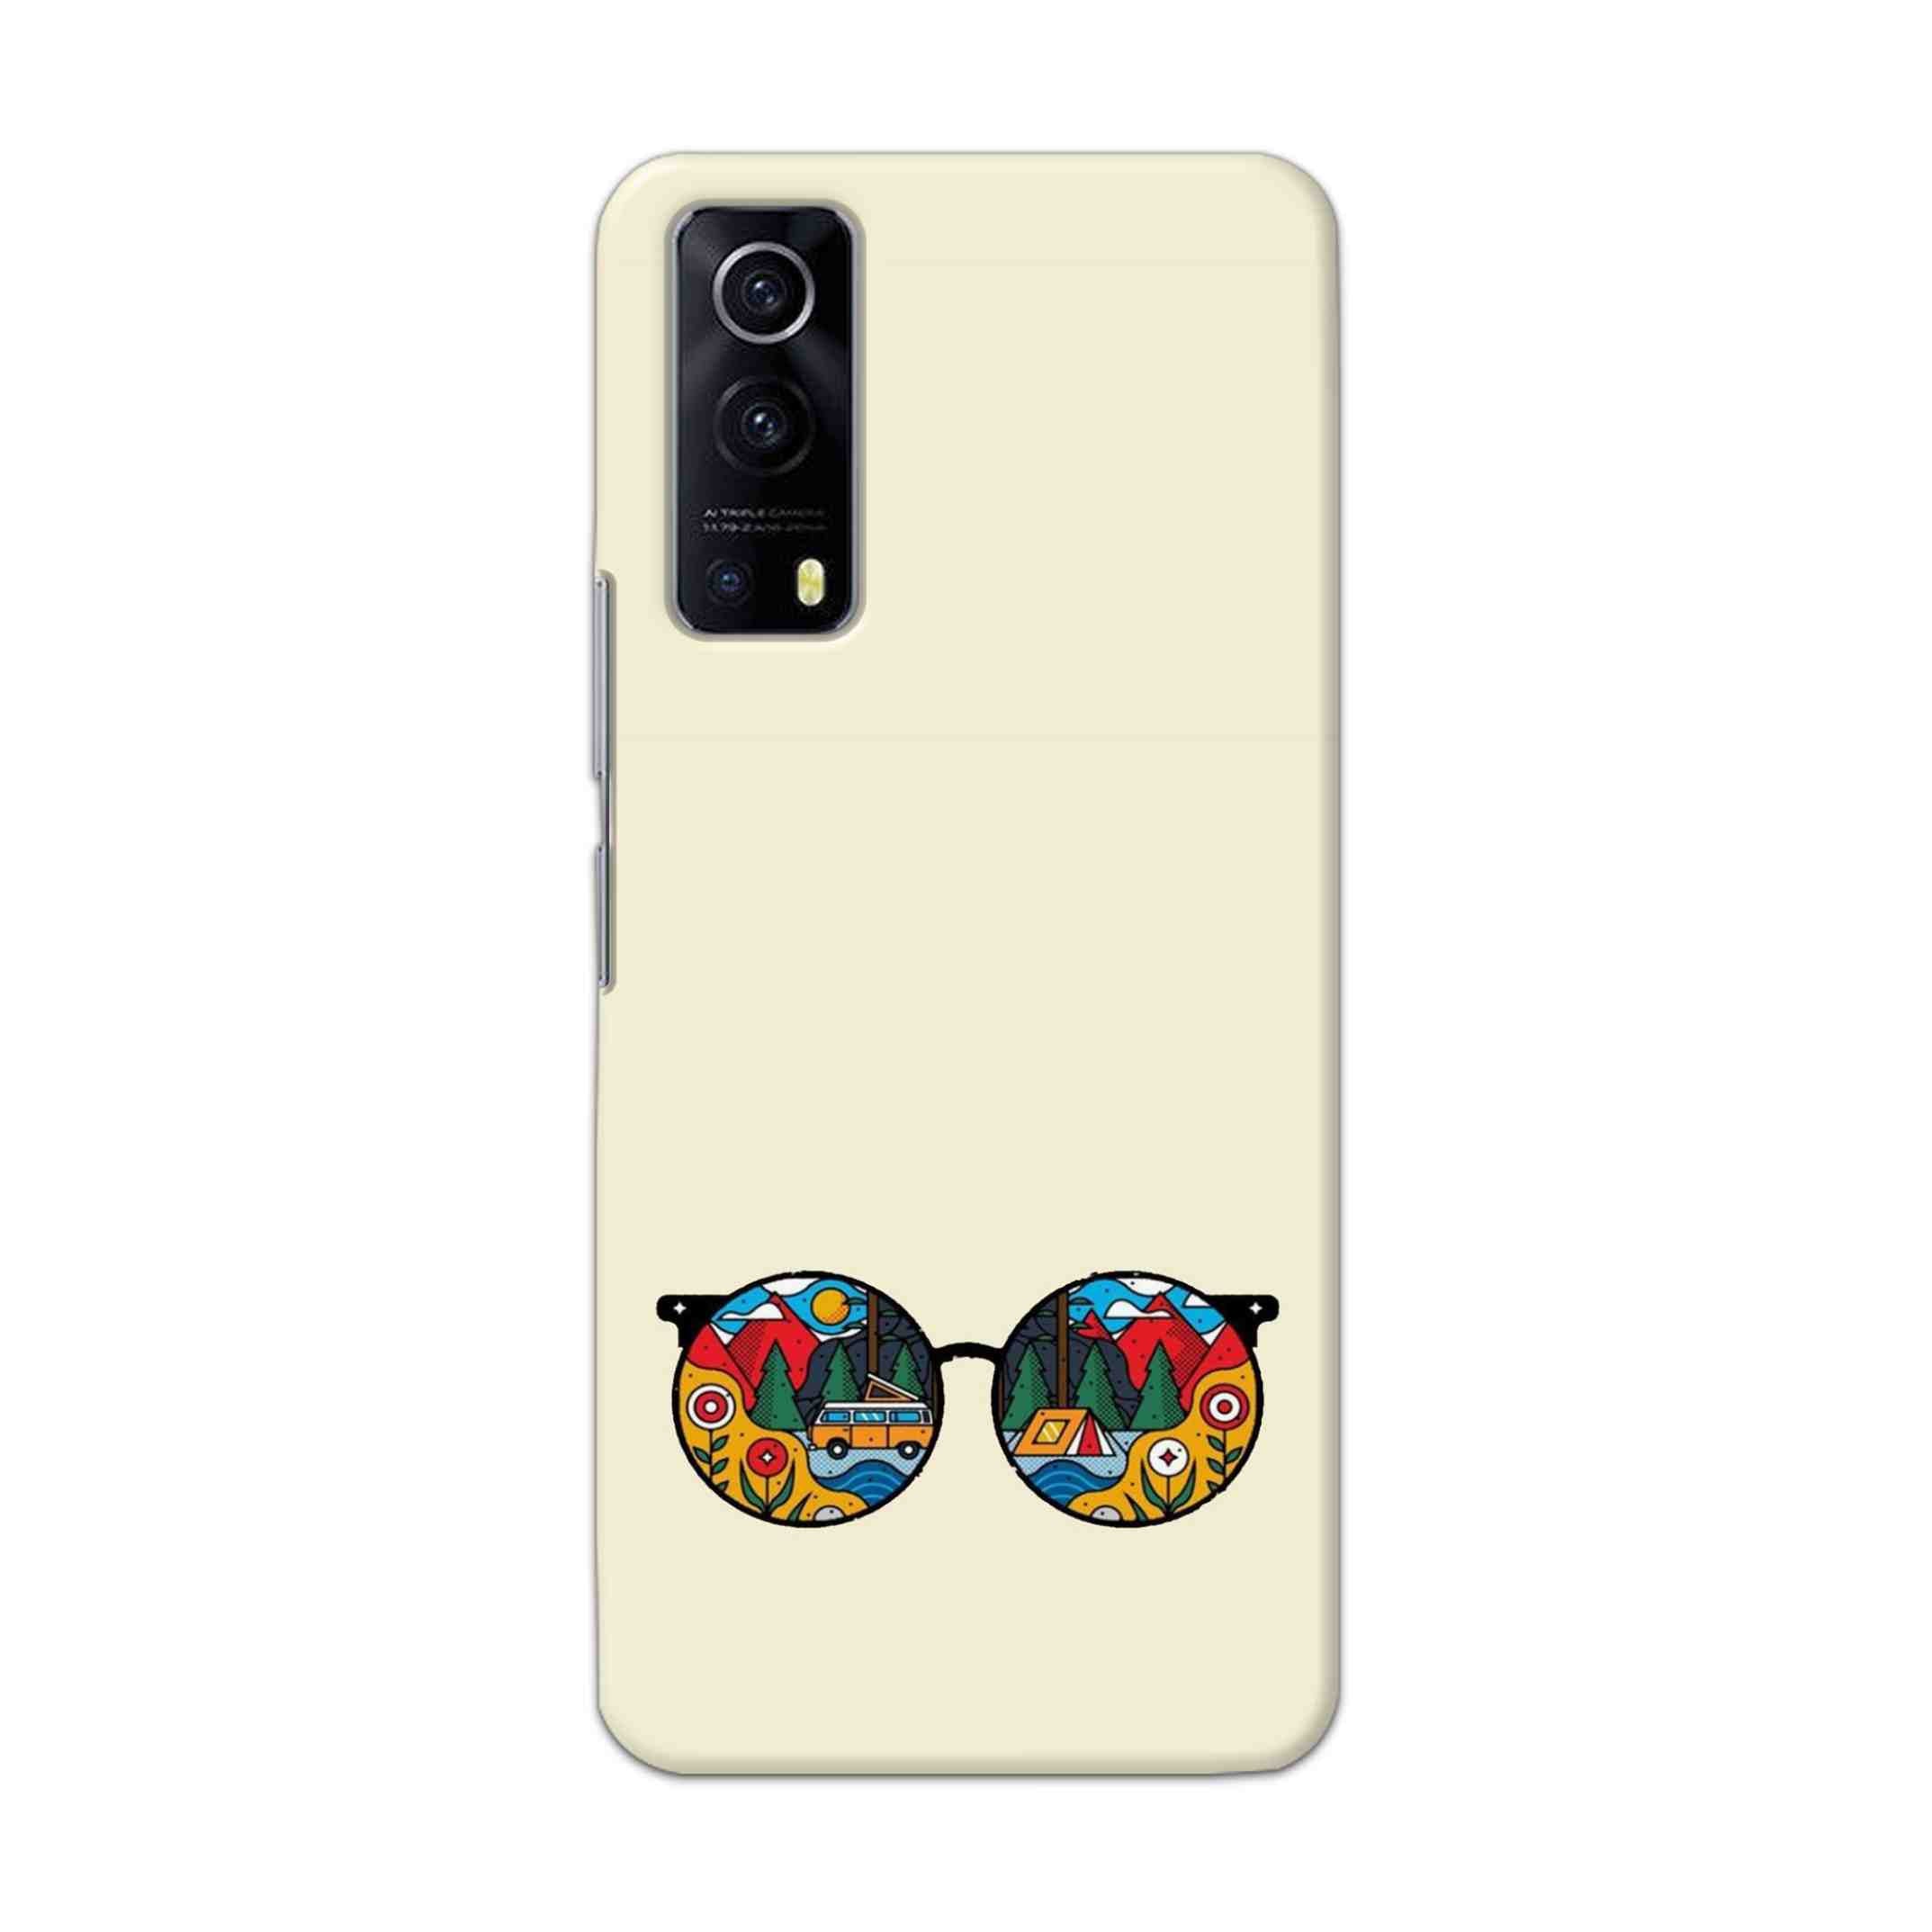 Buy Rainbow Sunglasses Hard Back Mobile Phone Case Cover For Vivo IQOO Z3 Online